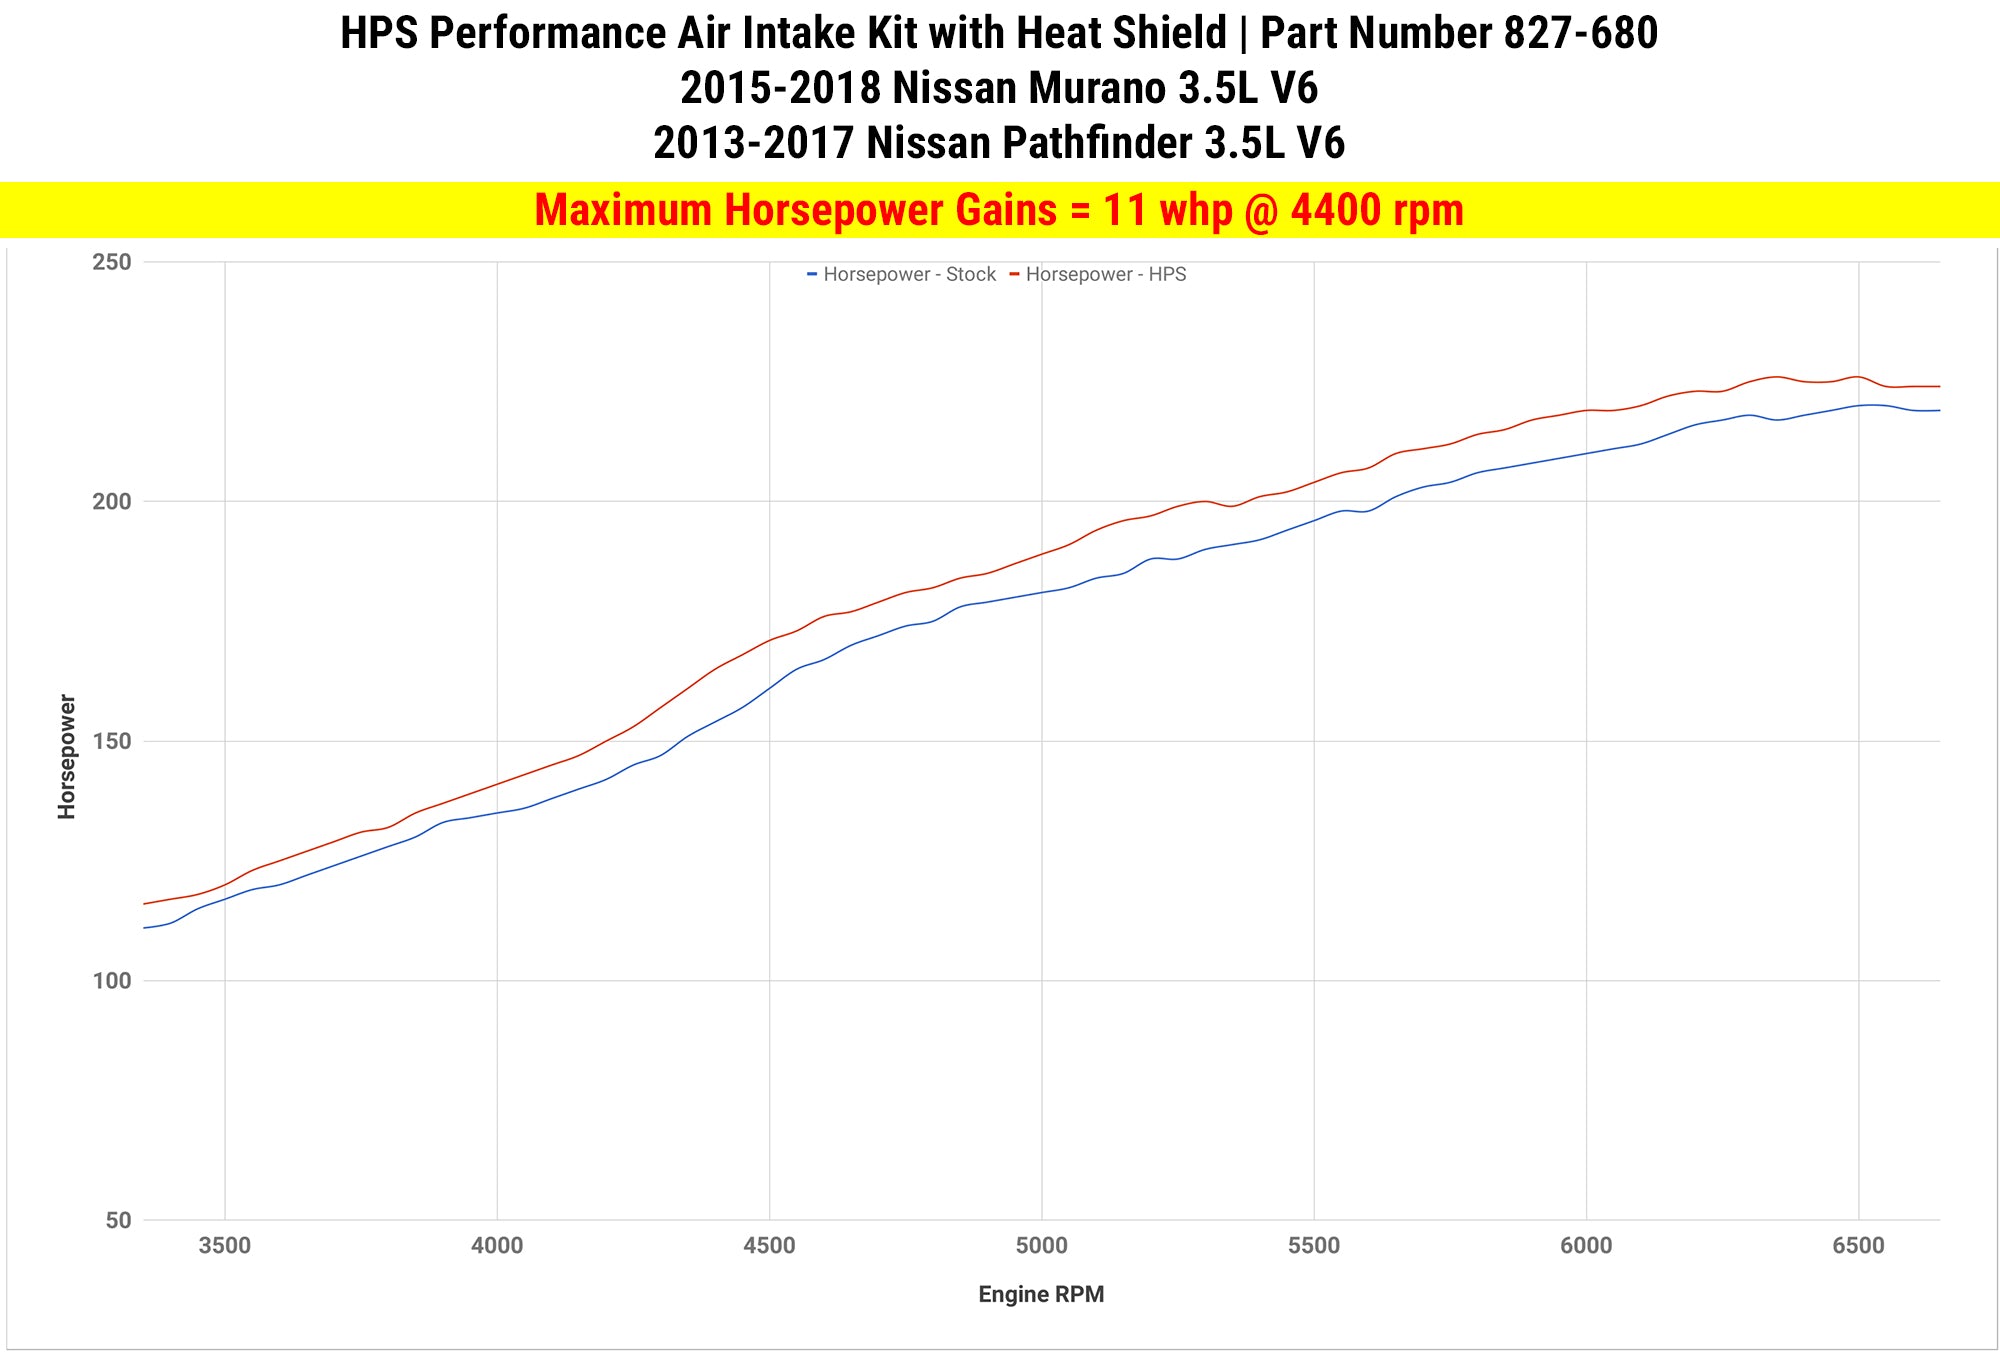 Dyno proven gains 11 whp HPS Performance Shortram Air Intake Kit 2015-2018 Nissan Murano 3.5L V6 827-680WB